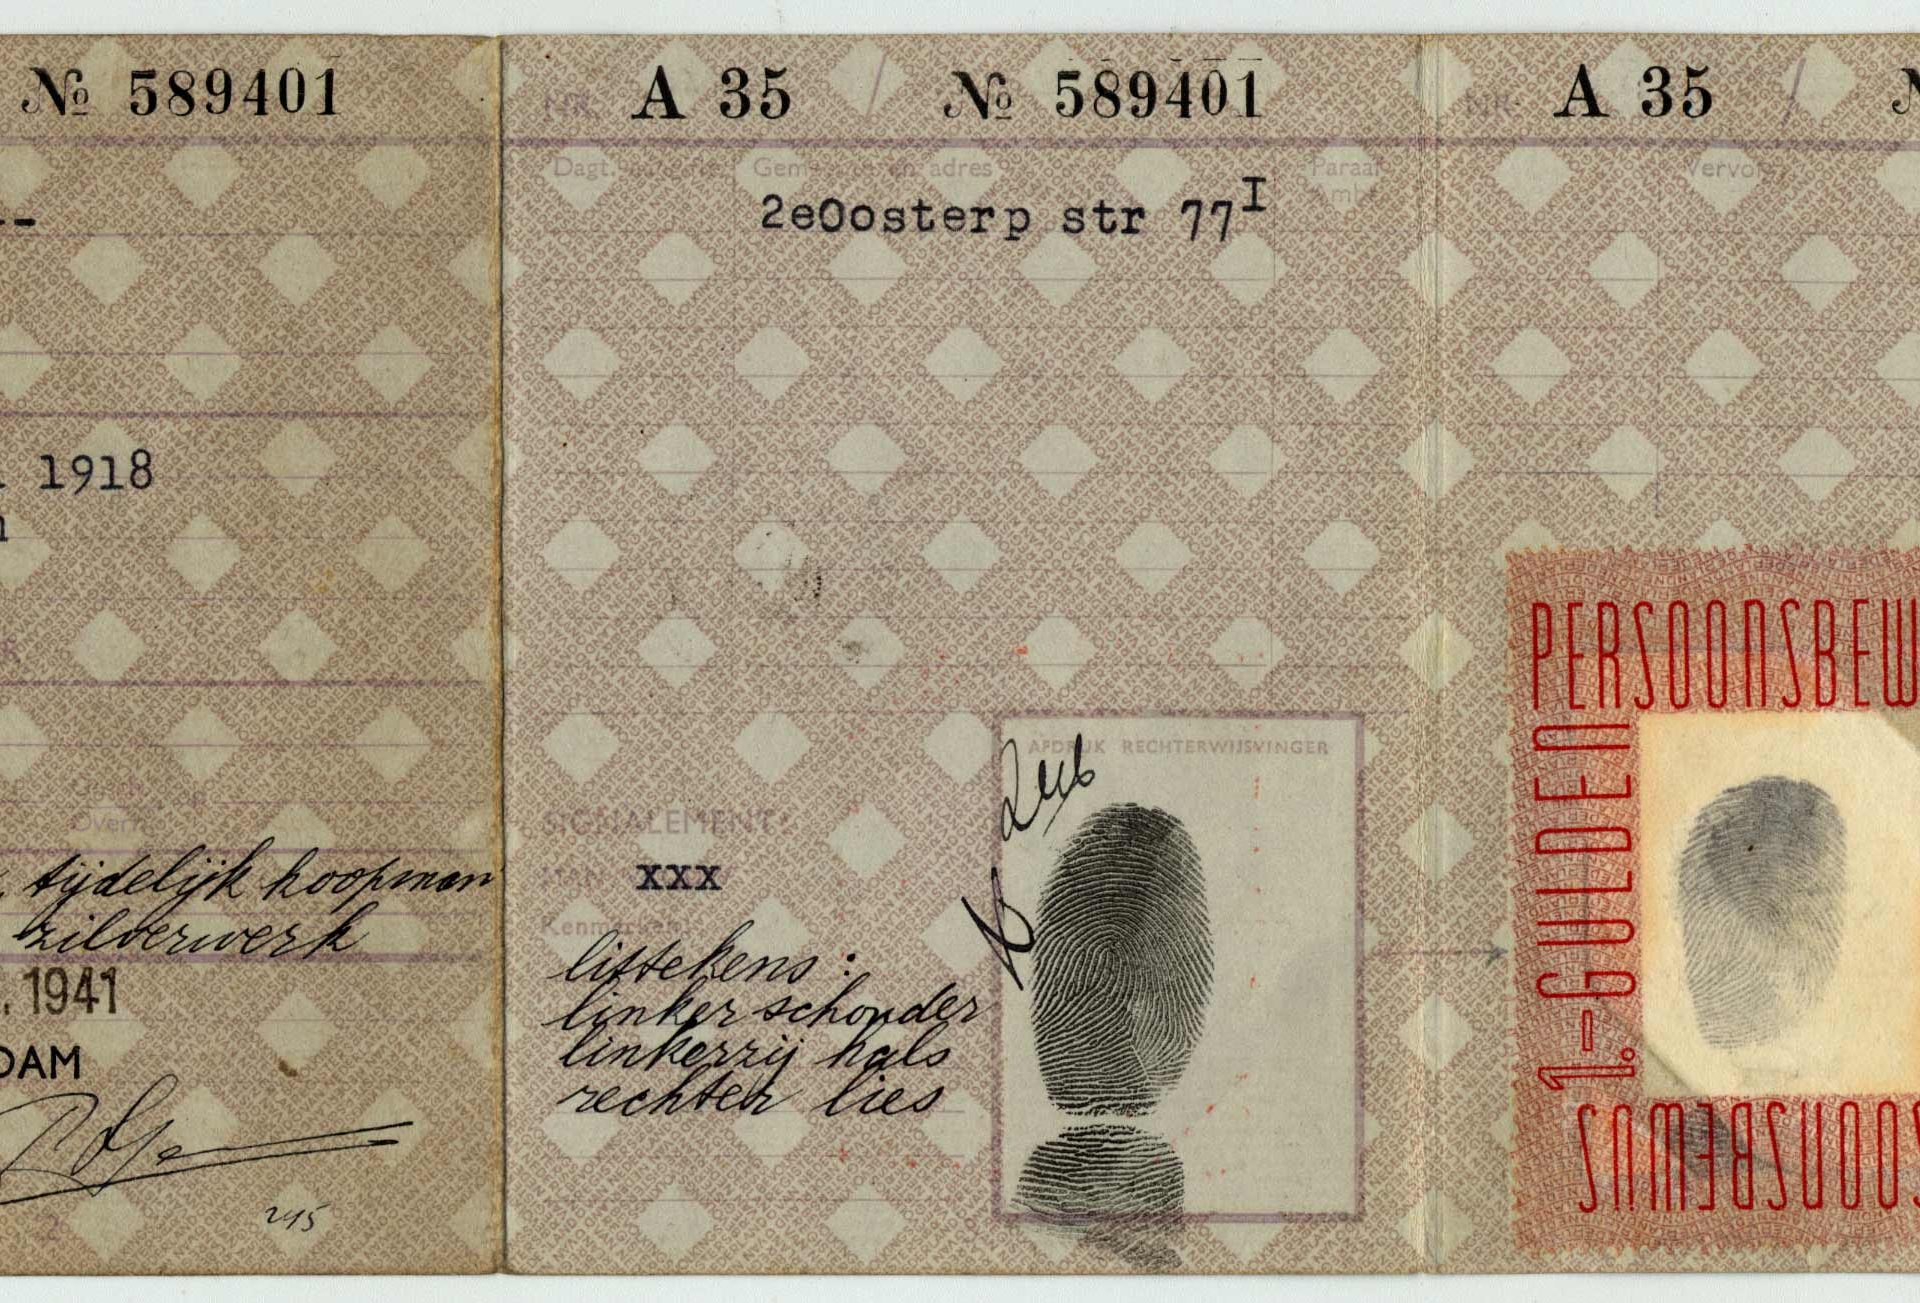 David Kropveld Dutch Identity Card stamped with a “J” for Jew.